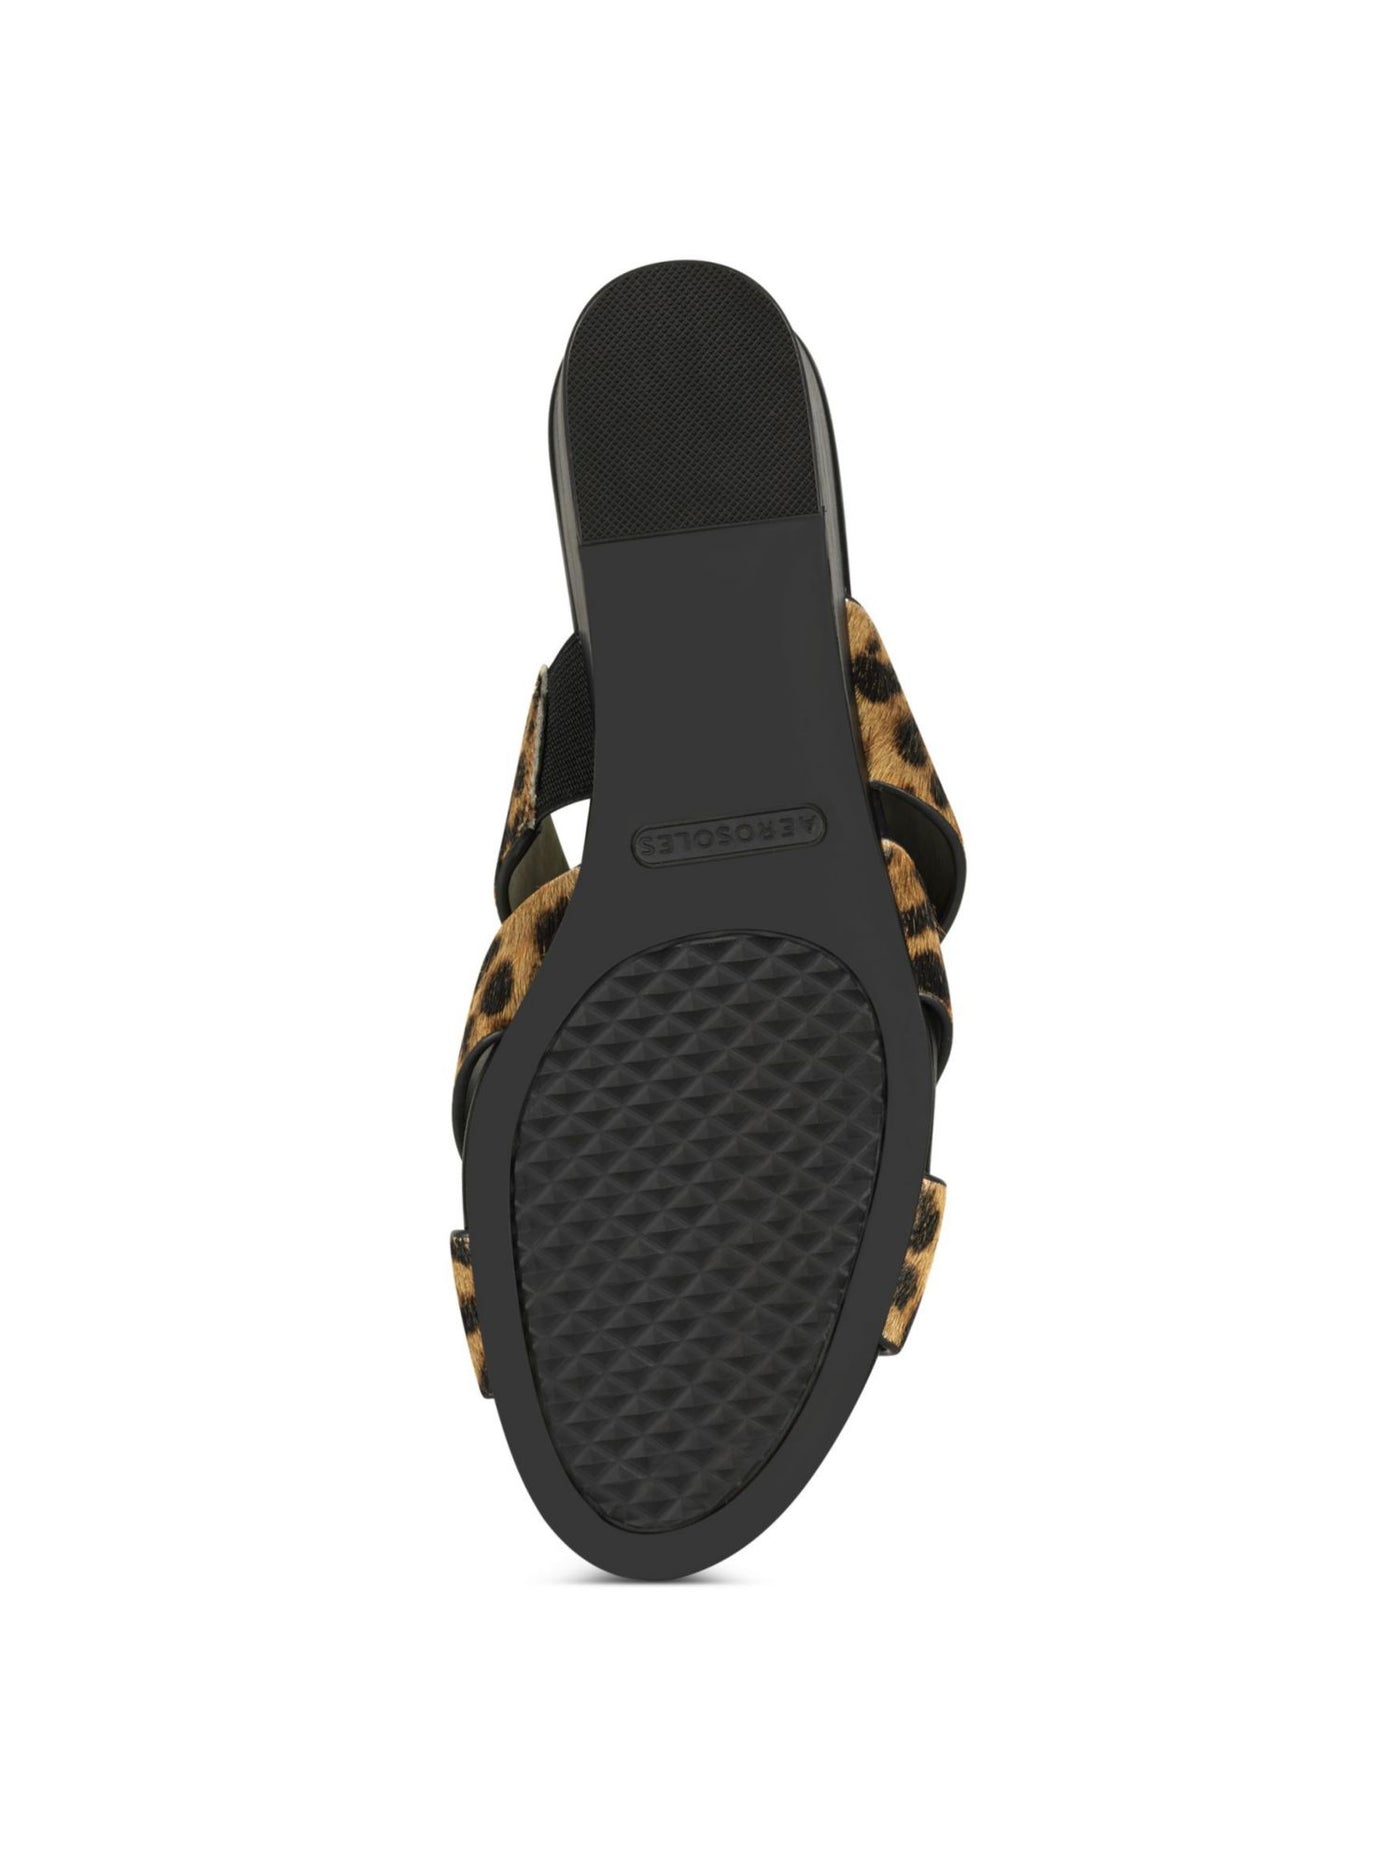 AEROSOLES Womens Brown Leopard Print Crisscross Straps Side Gore Core Comfort Technology Comfort Westfield Almond Toe Wedge Slip On Leather Slide Sandals Shoes W